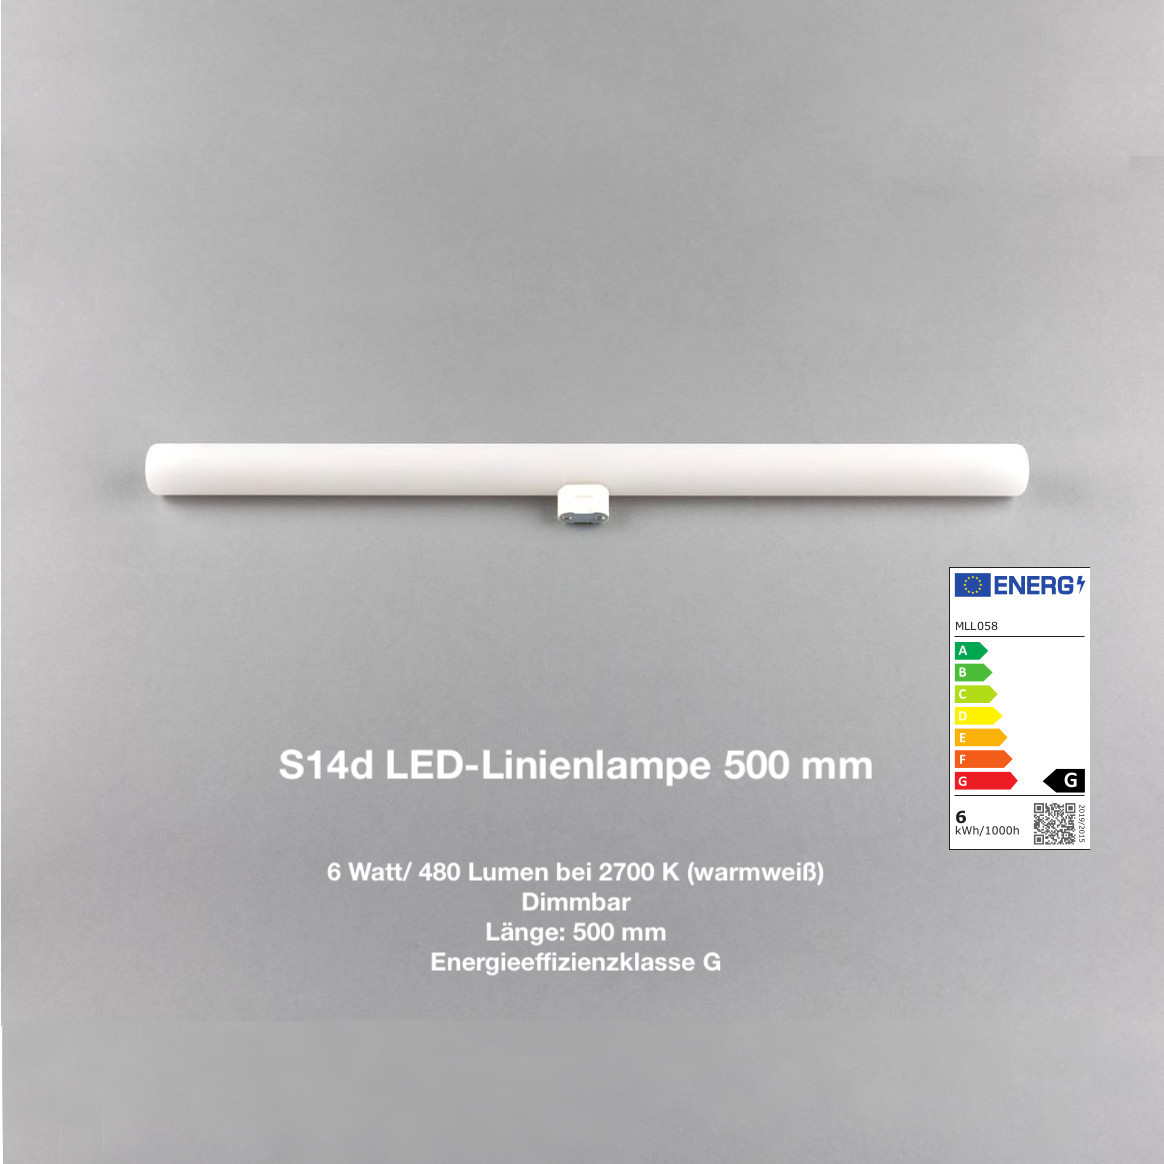 S14d LED-Linienlampe 500 mm, 6 Watt, G, Bild 